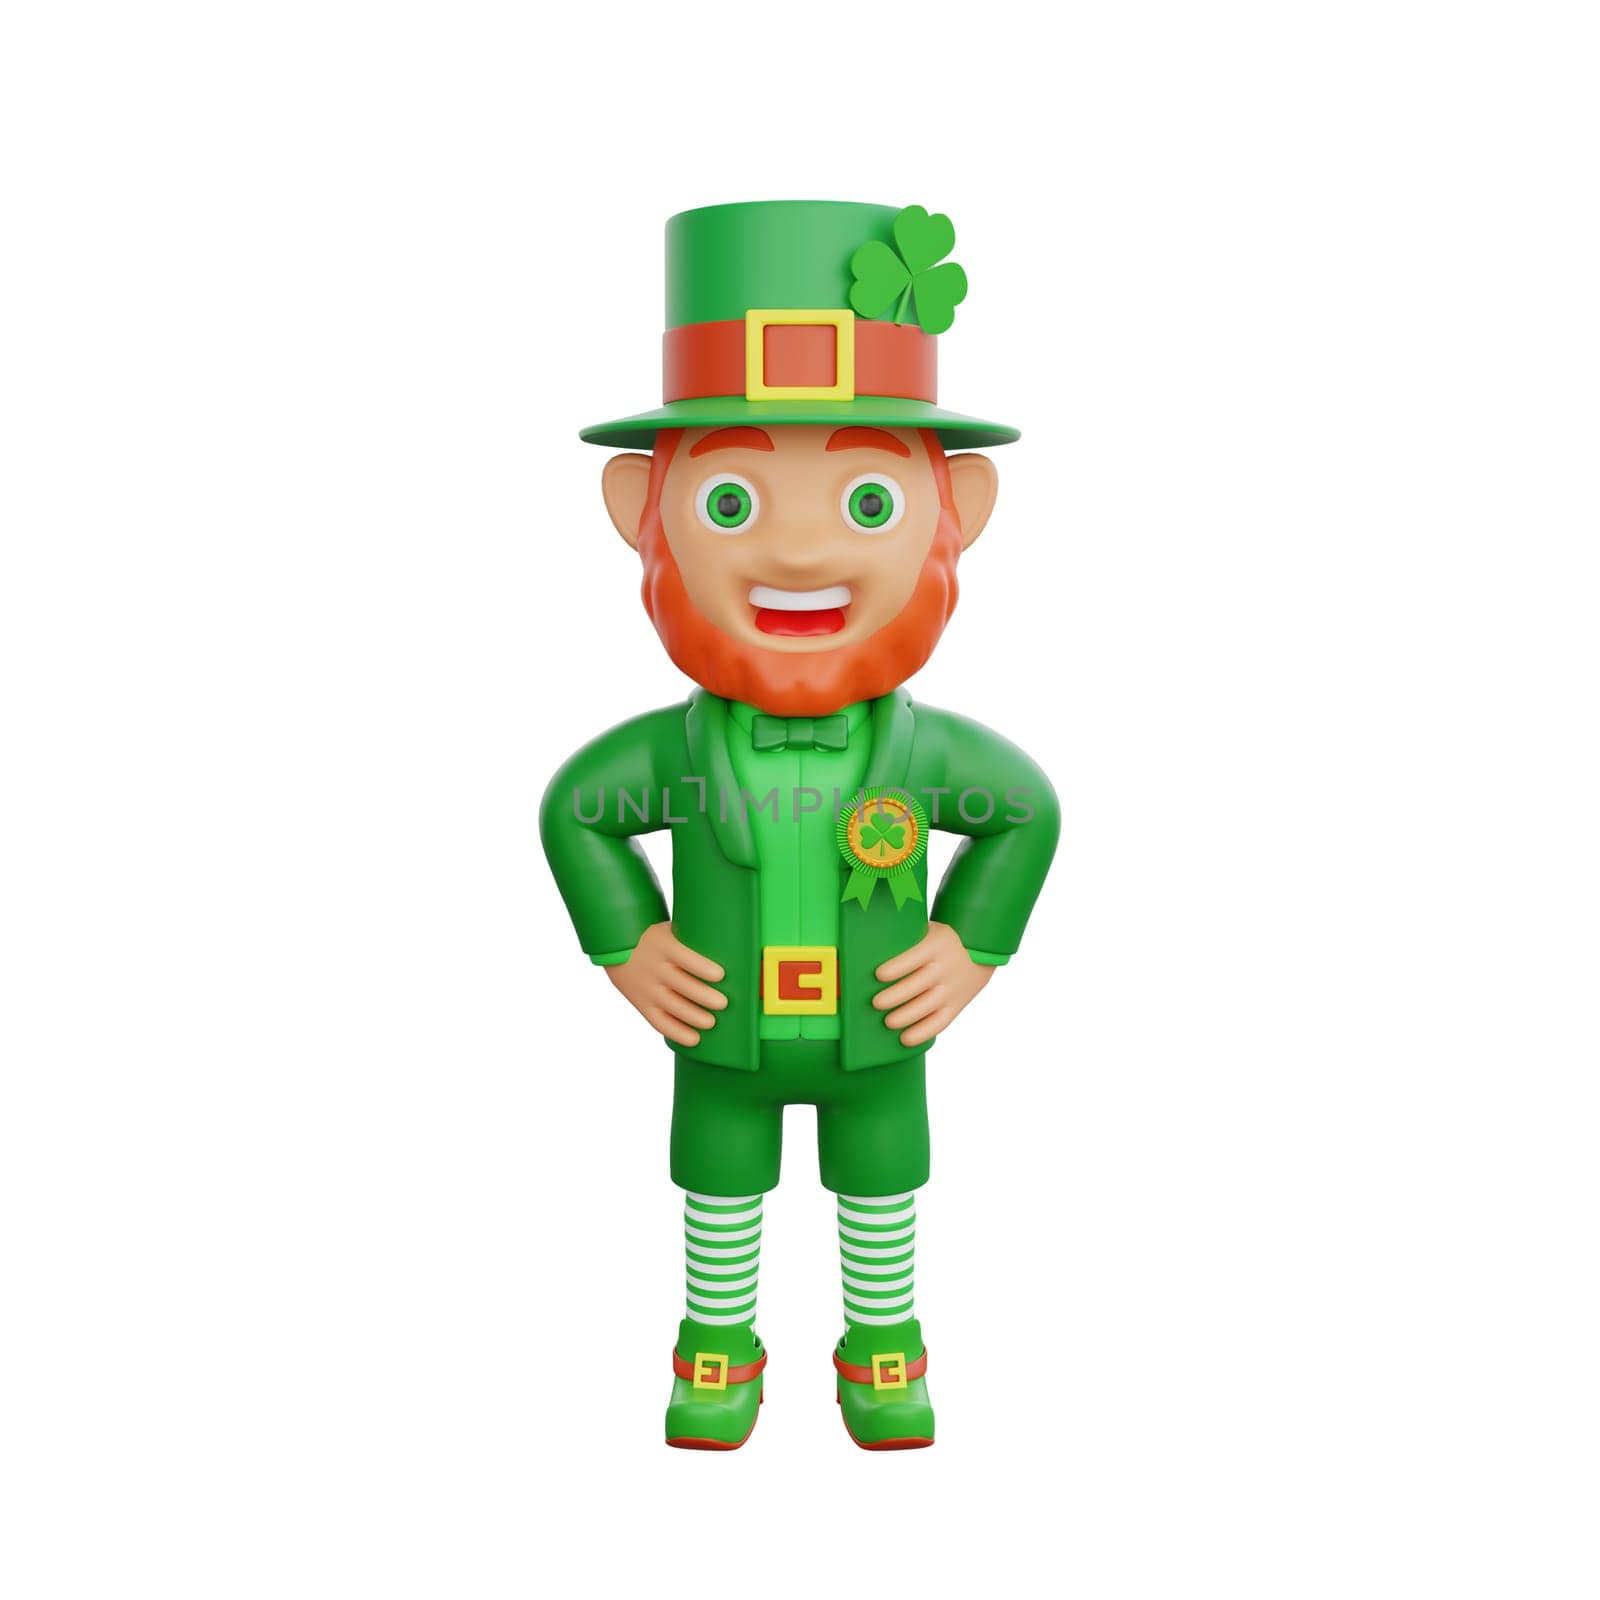 3D illustration of St. Patrick's Day character leprechaun proudly displaying a badge by Rahmat_Djayusman